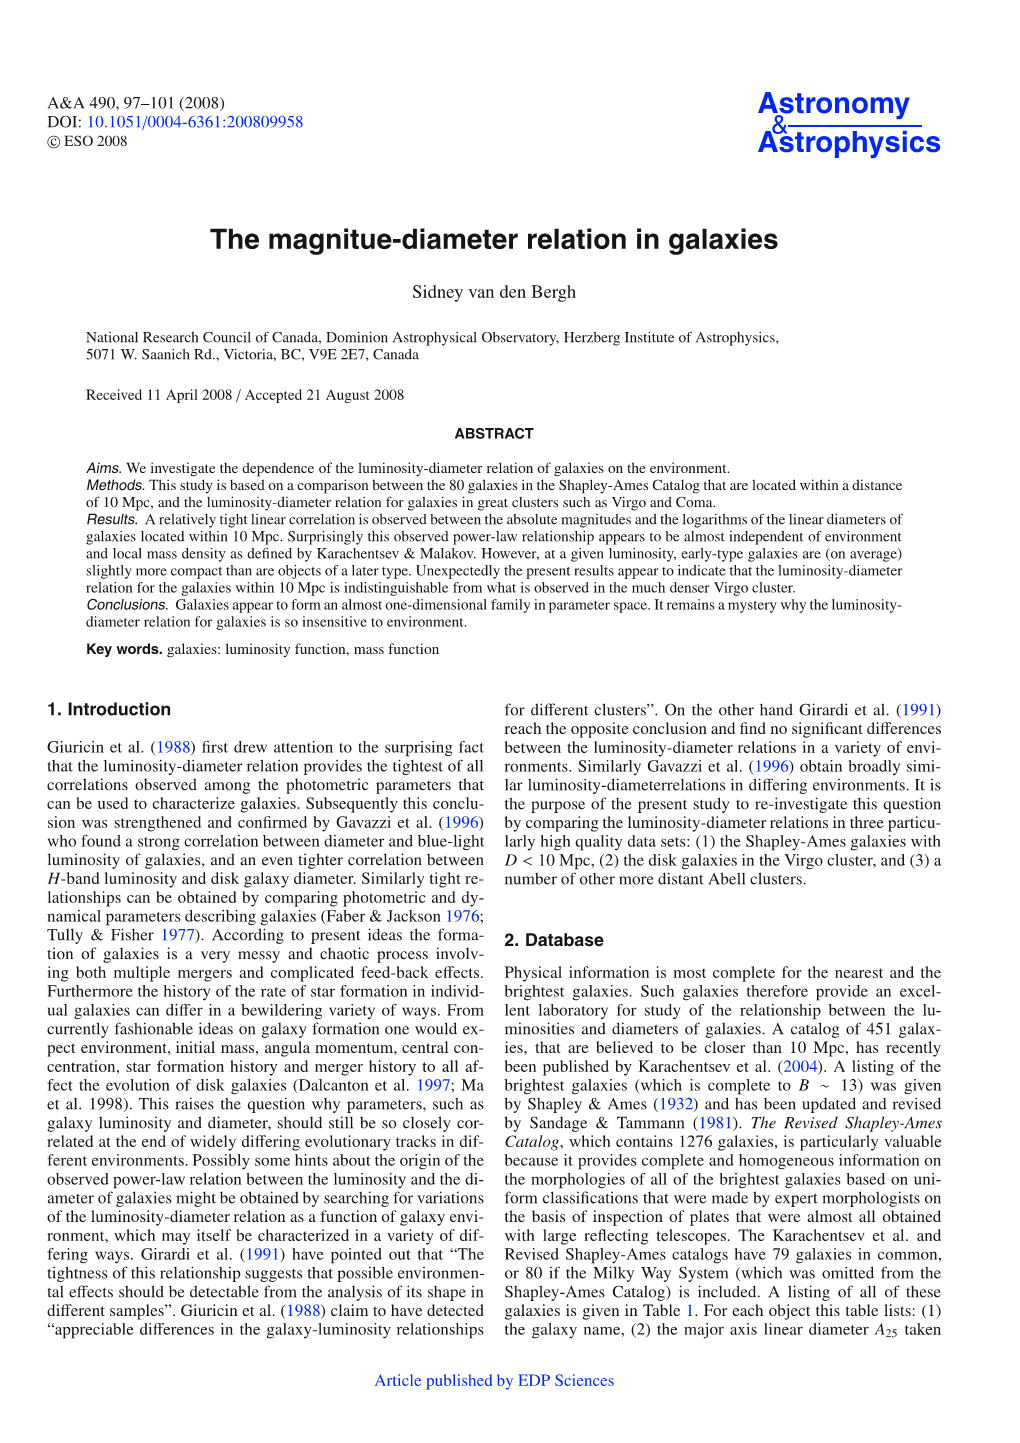 The Magnitue-Diameter Relation in Galaxies